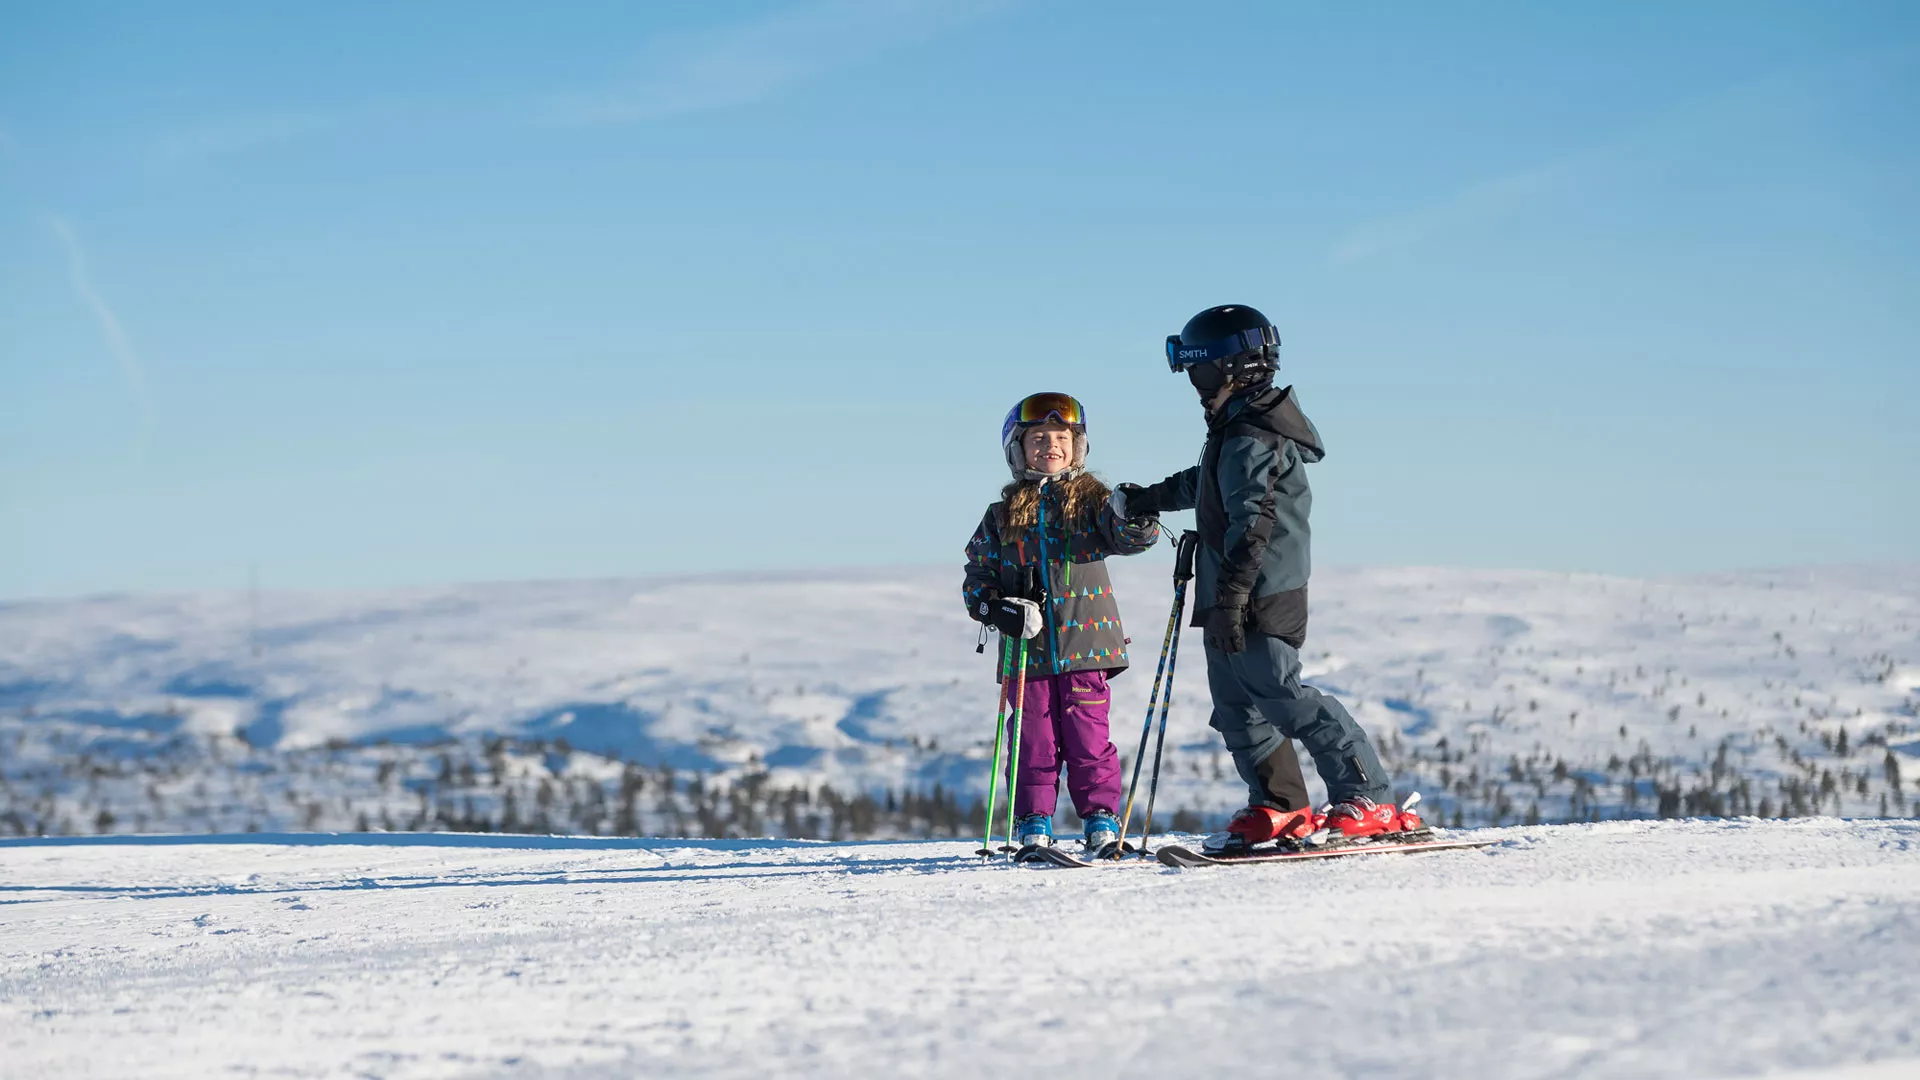 SkiStar Salen in Sweden, Europe | Snowboarding,Skiing - Rated 0.8